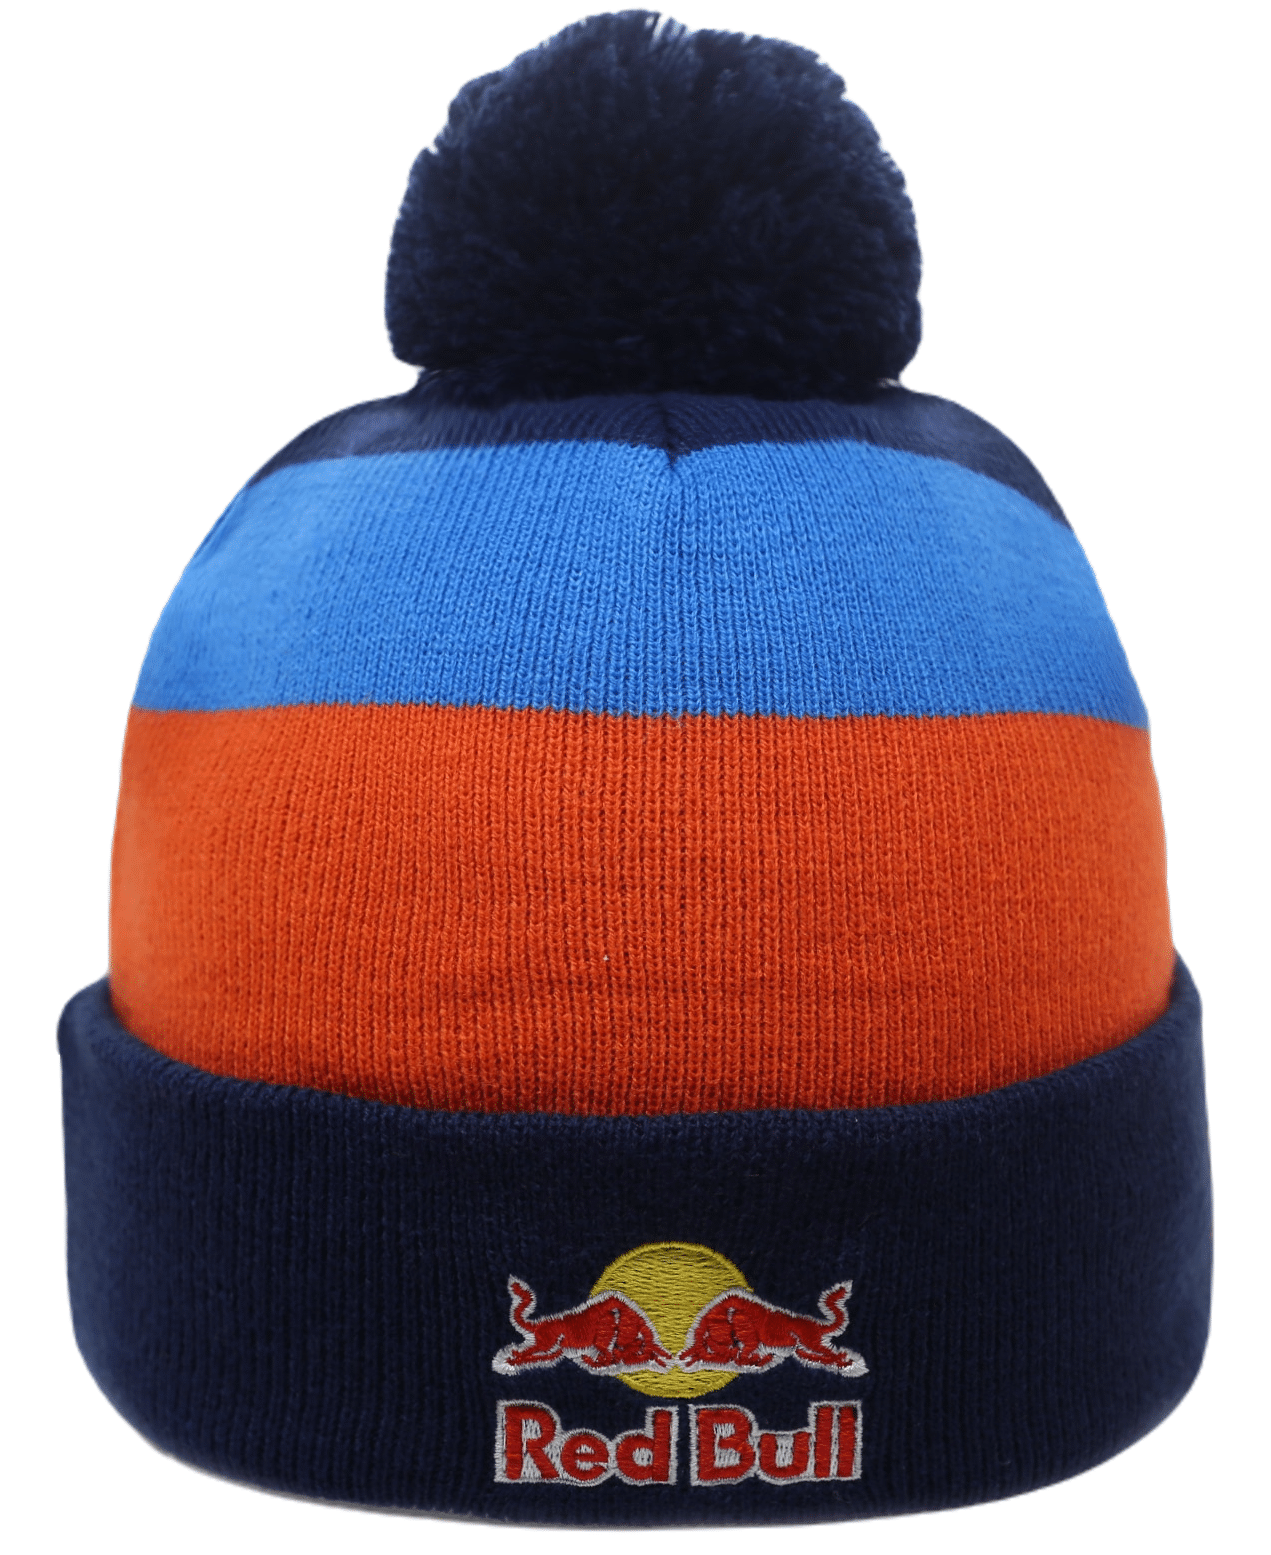 red-bull-beanie-pompom-hat-orange-sky-blue-ski-cap